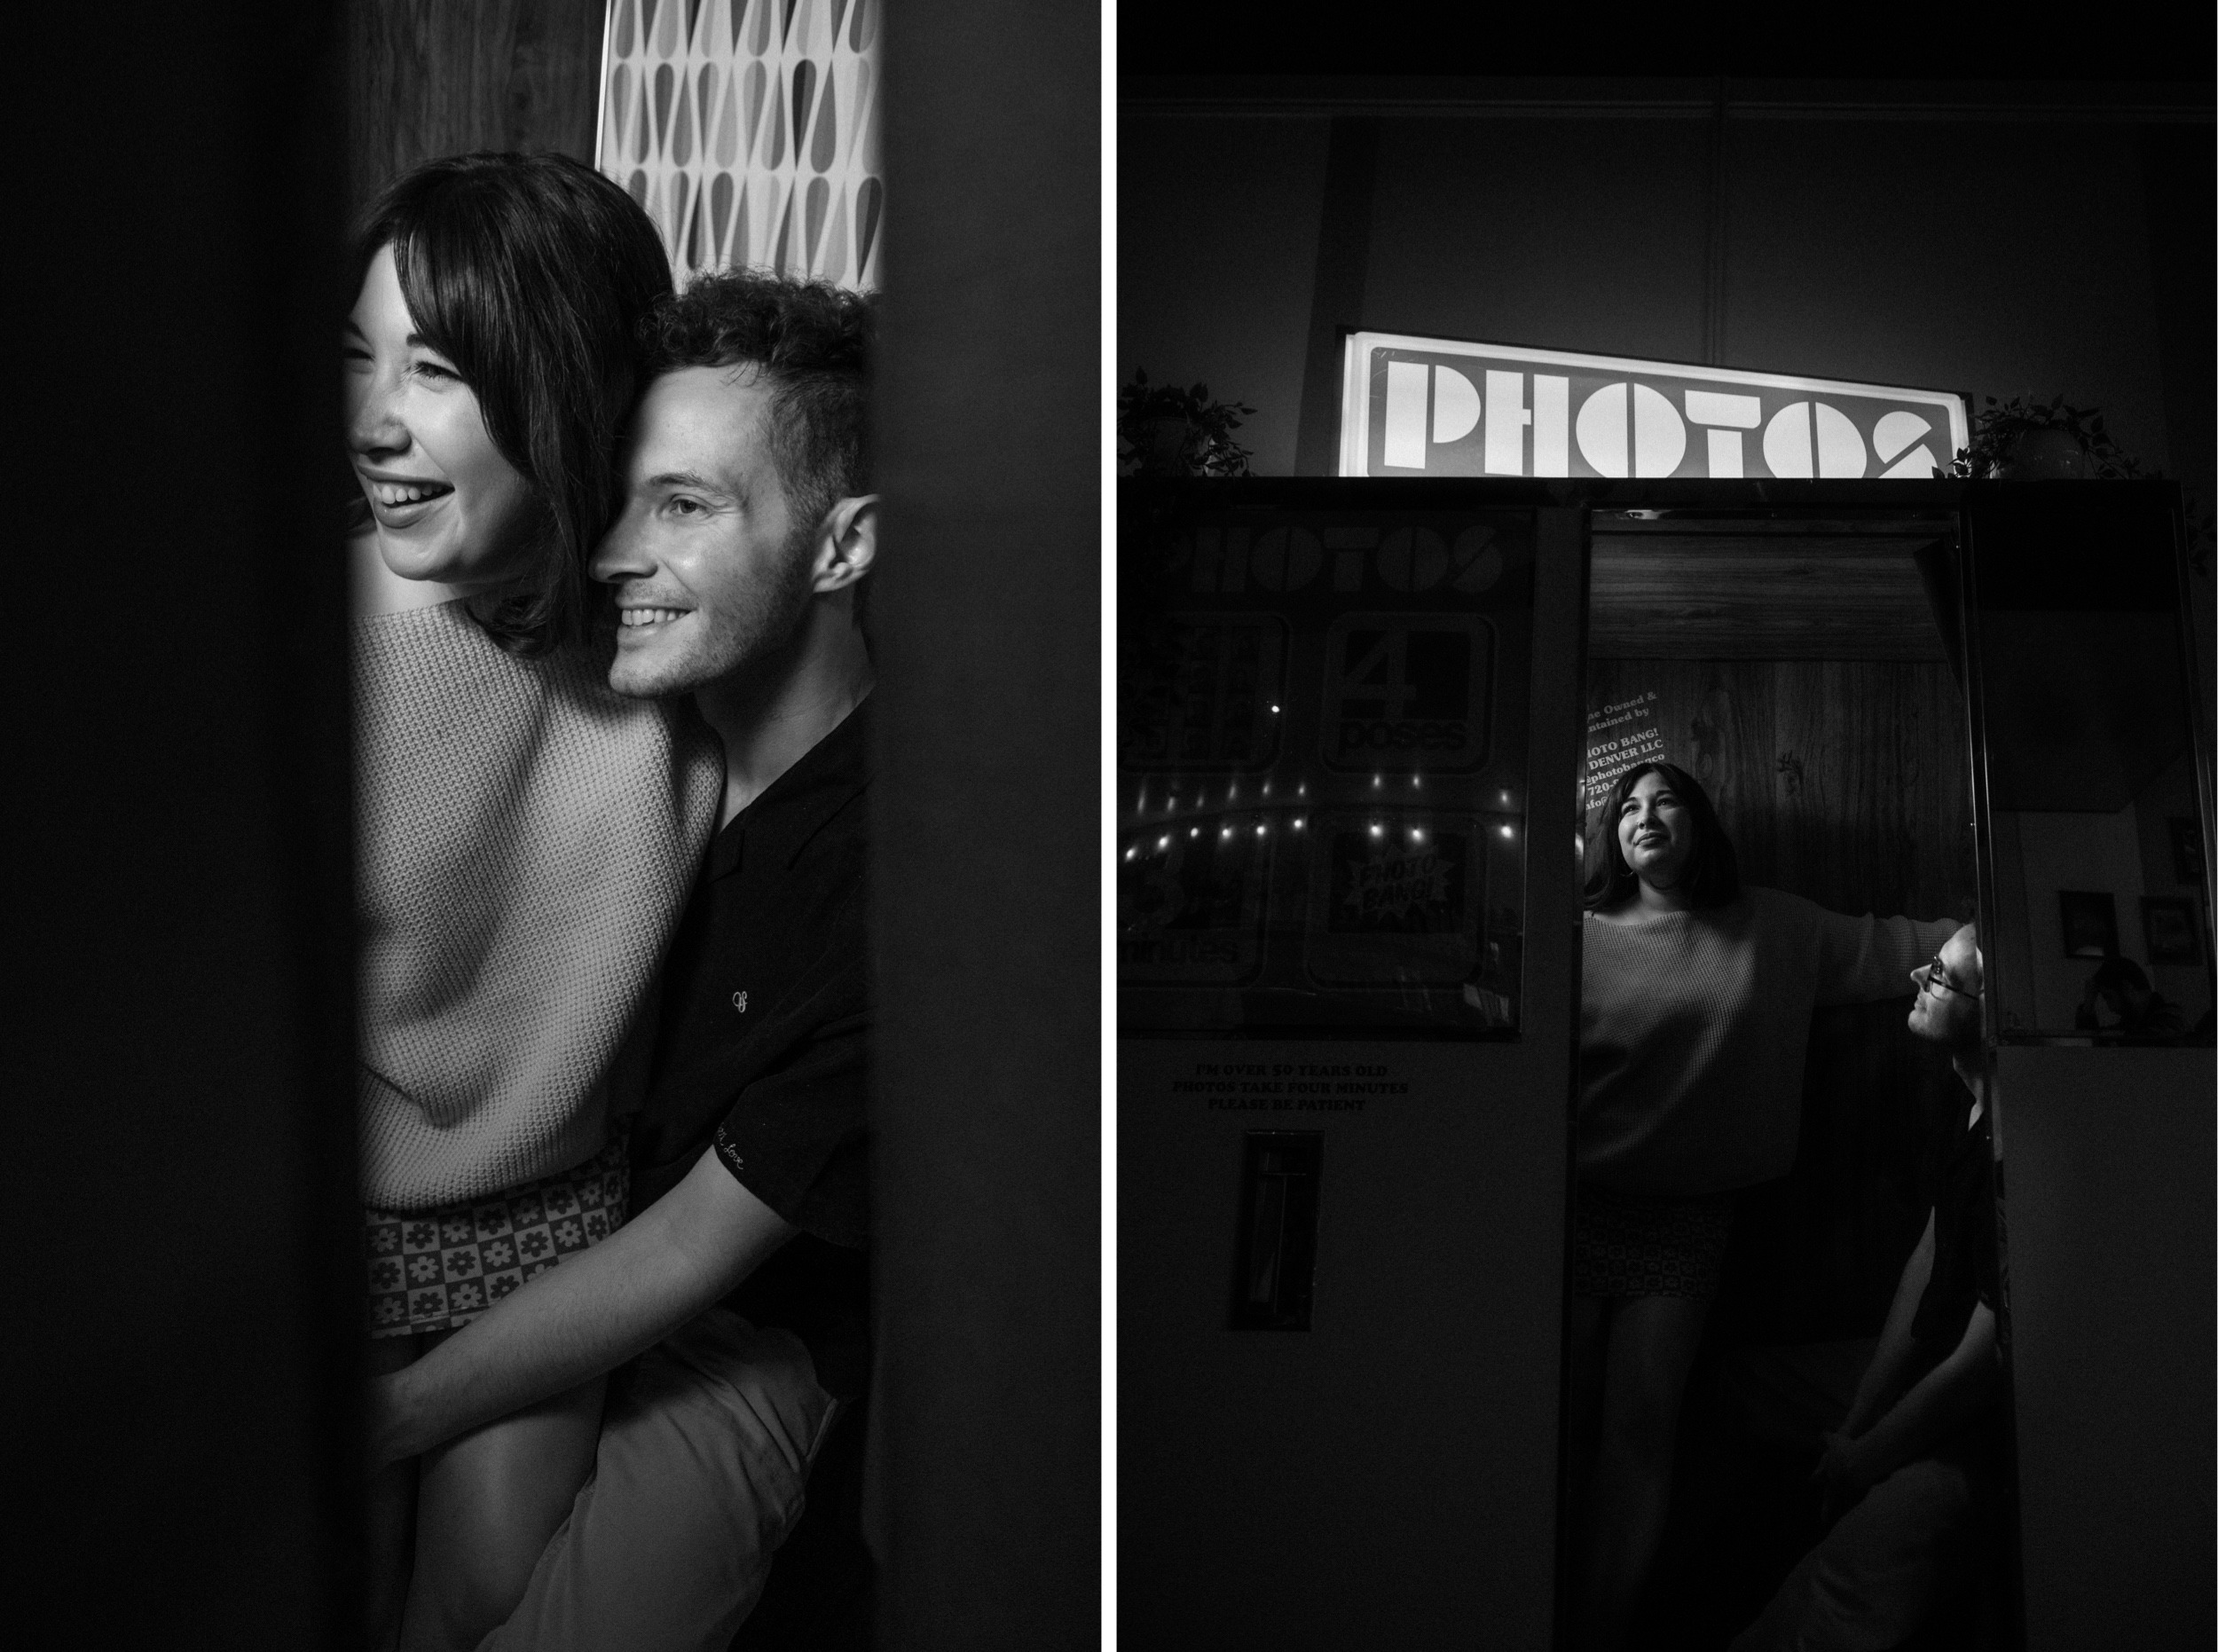 A fun engagement shoot at a bar in Denver. Sputnik, Denver bar engagement photos. Colorado engagement photos by Ashley Joyce.